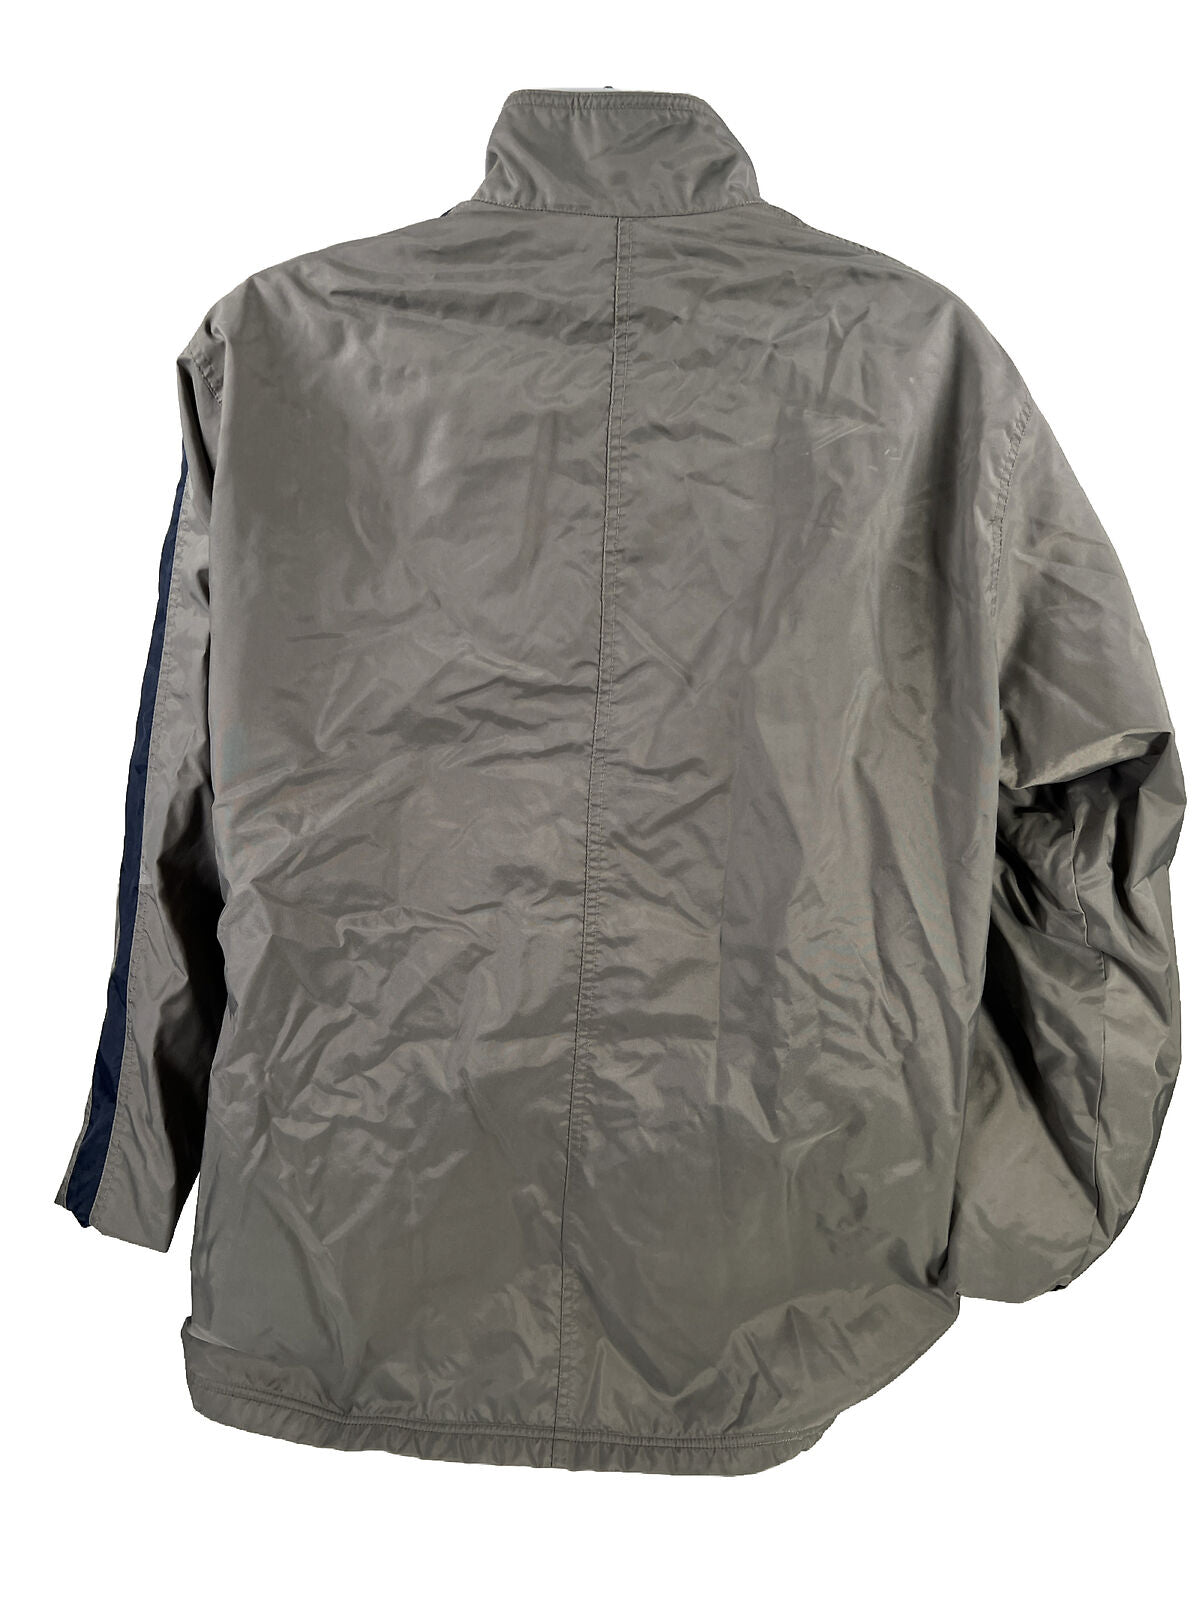 Nike Men's Vintage Green Full Zip Fleece Lined Jacket - XL